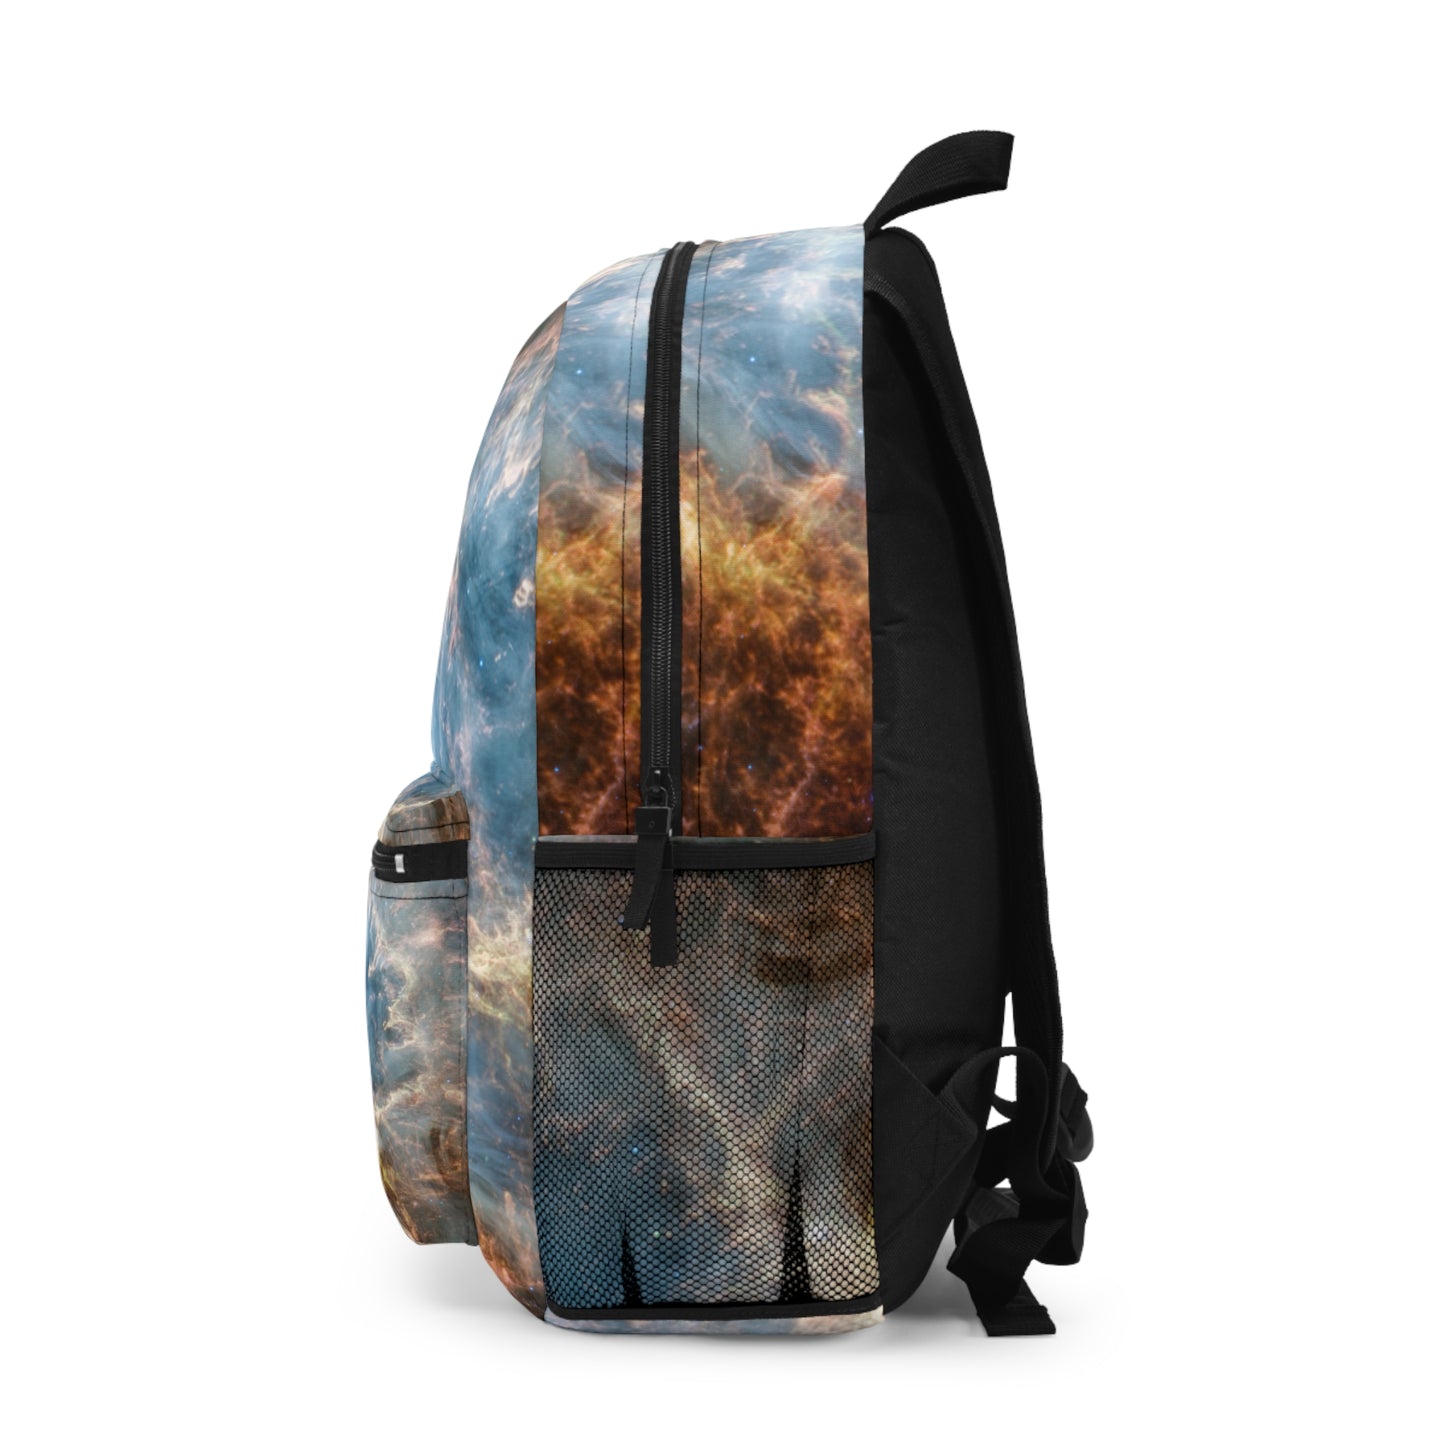 Crab Nebula (NIRCam and MIRI Image) - Backpack